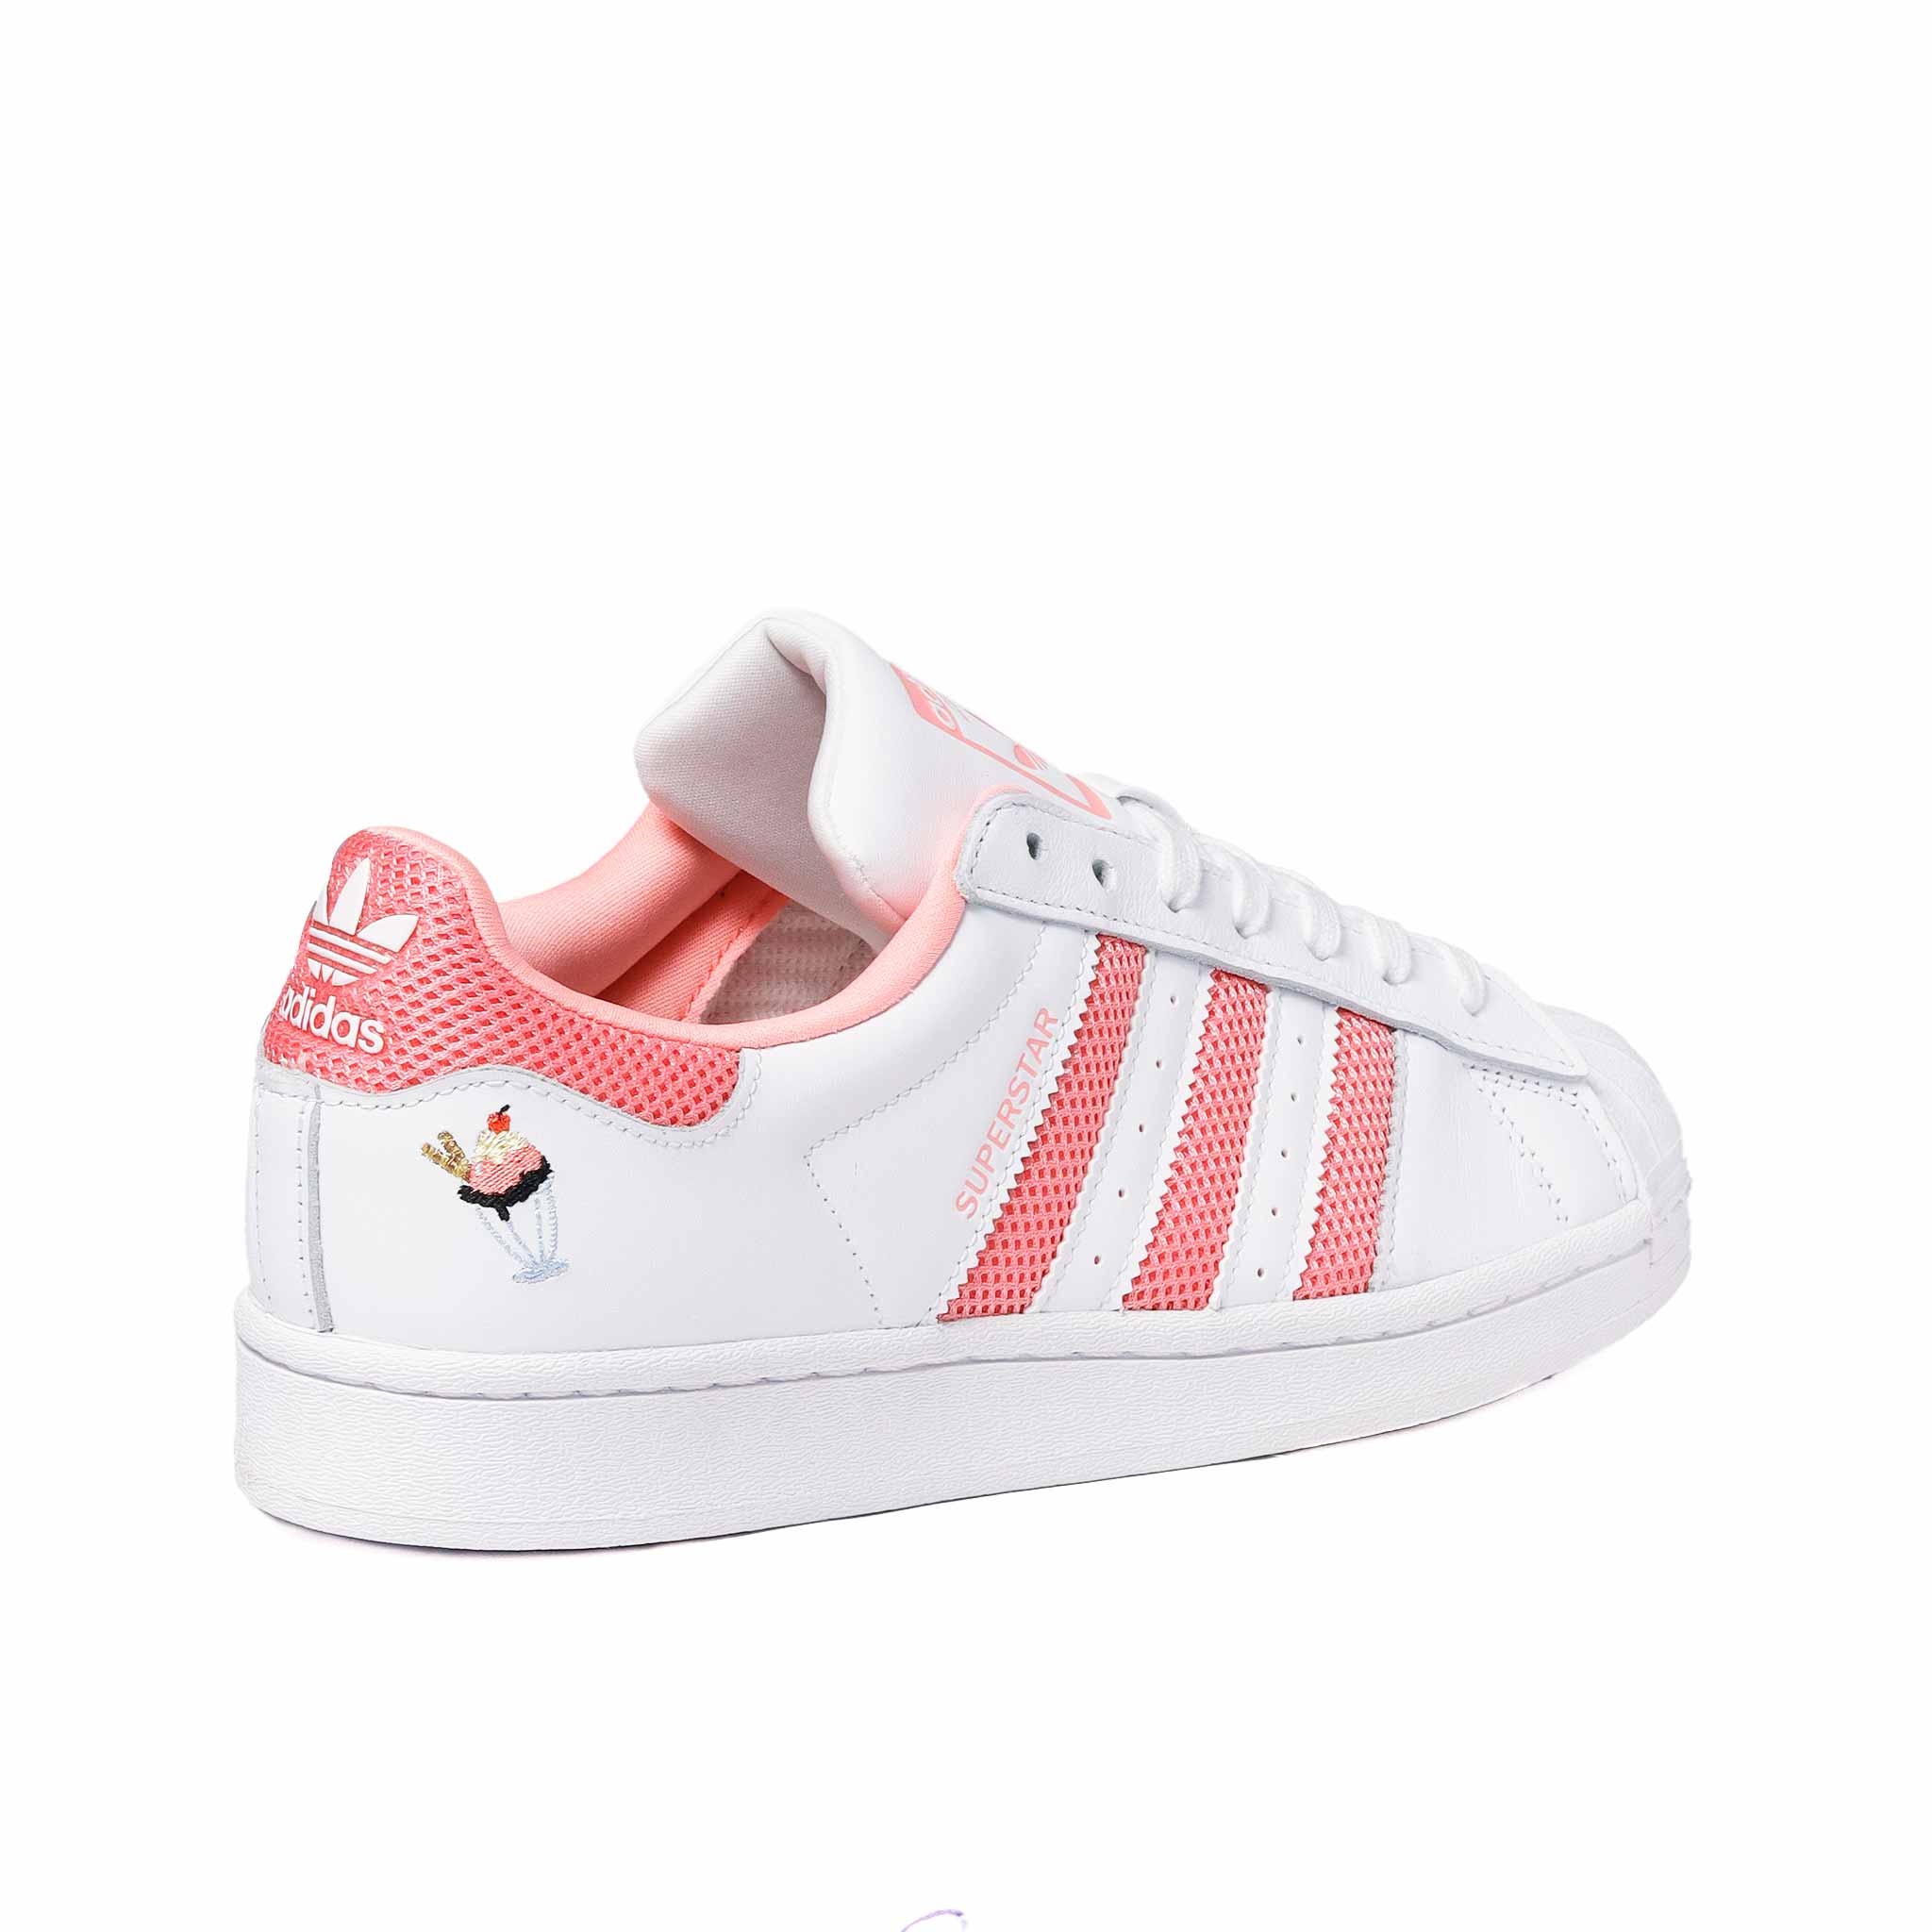 Adidas Superstar Mujer H03895 Casual Blanco/Rosa